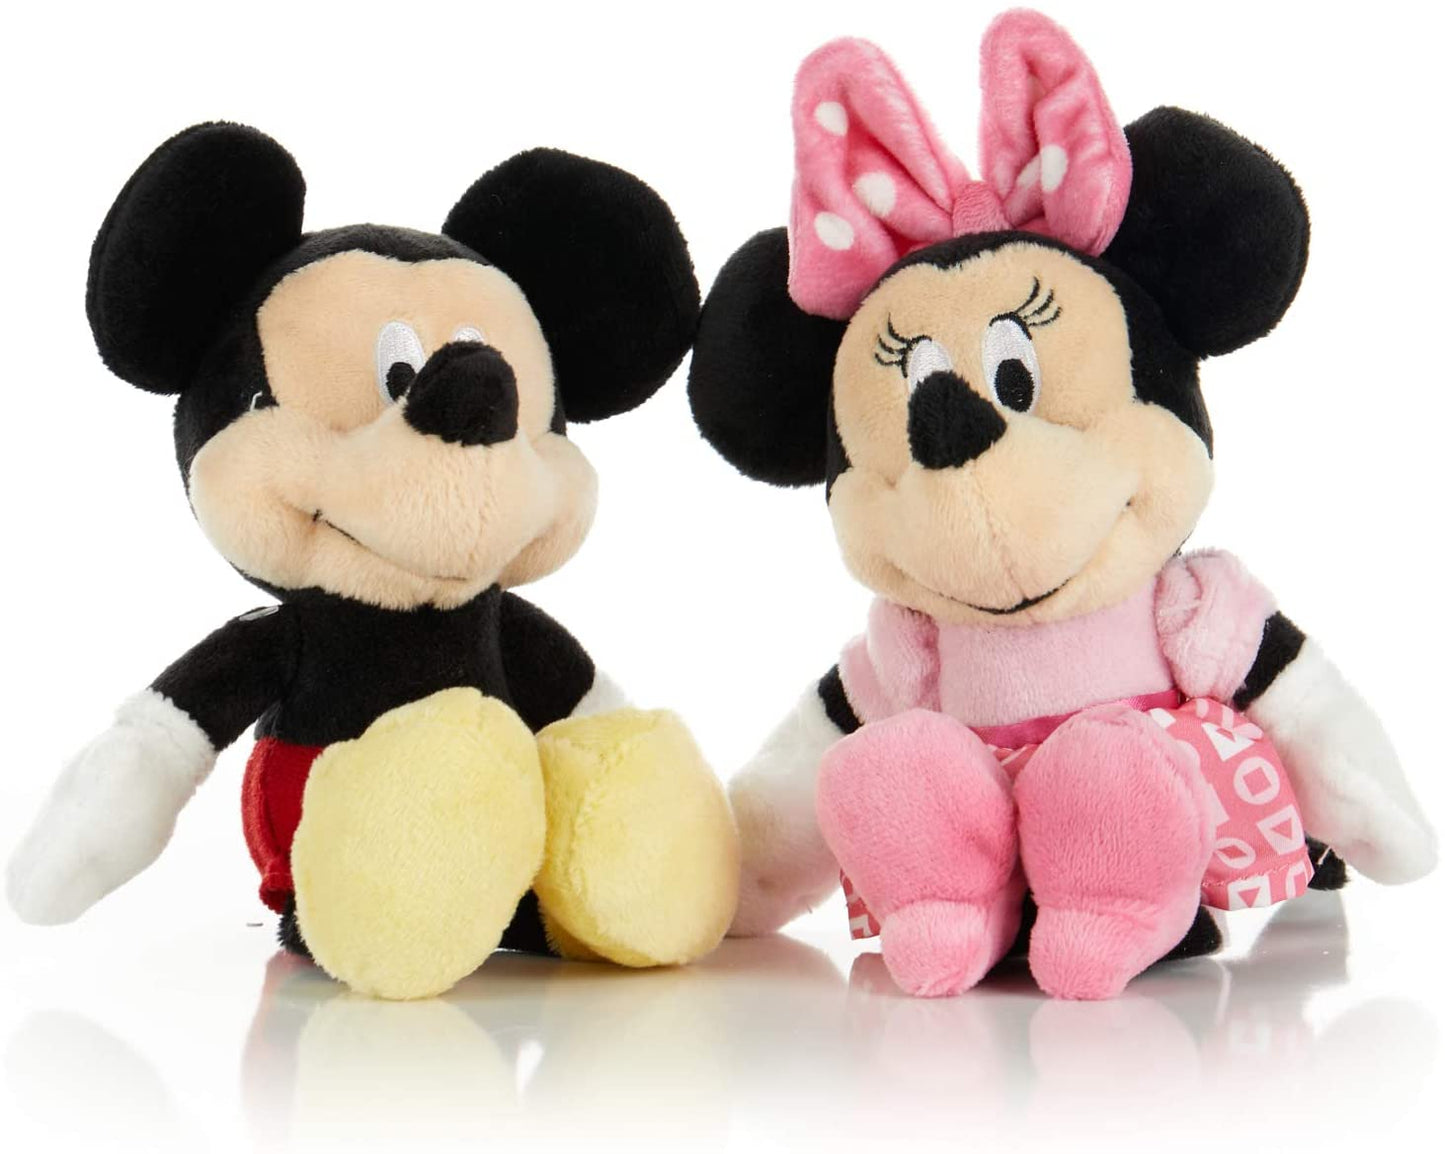 Disney Mickey or Minnie Mouse Stuffed Animal Plush Toy Mini Jingler, 8 inches